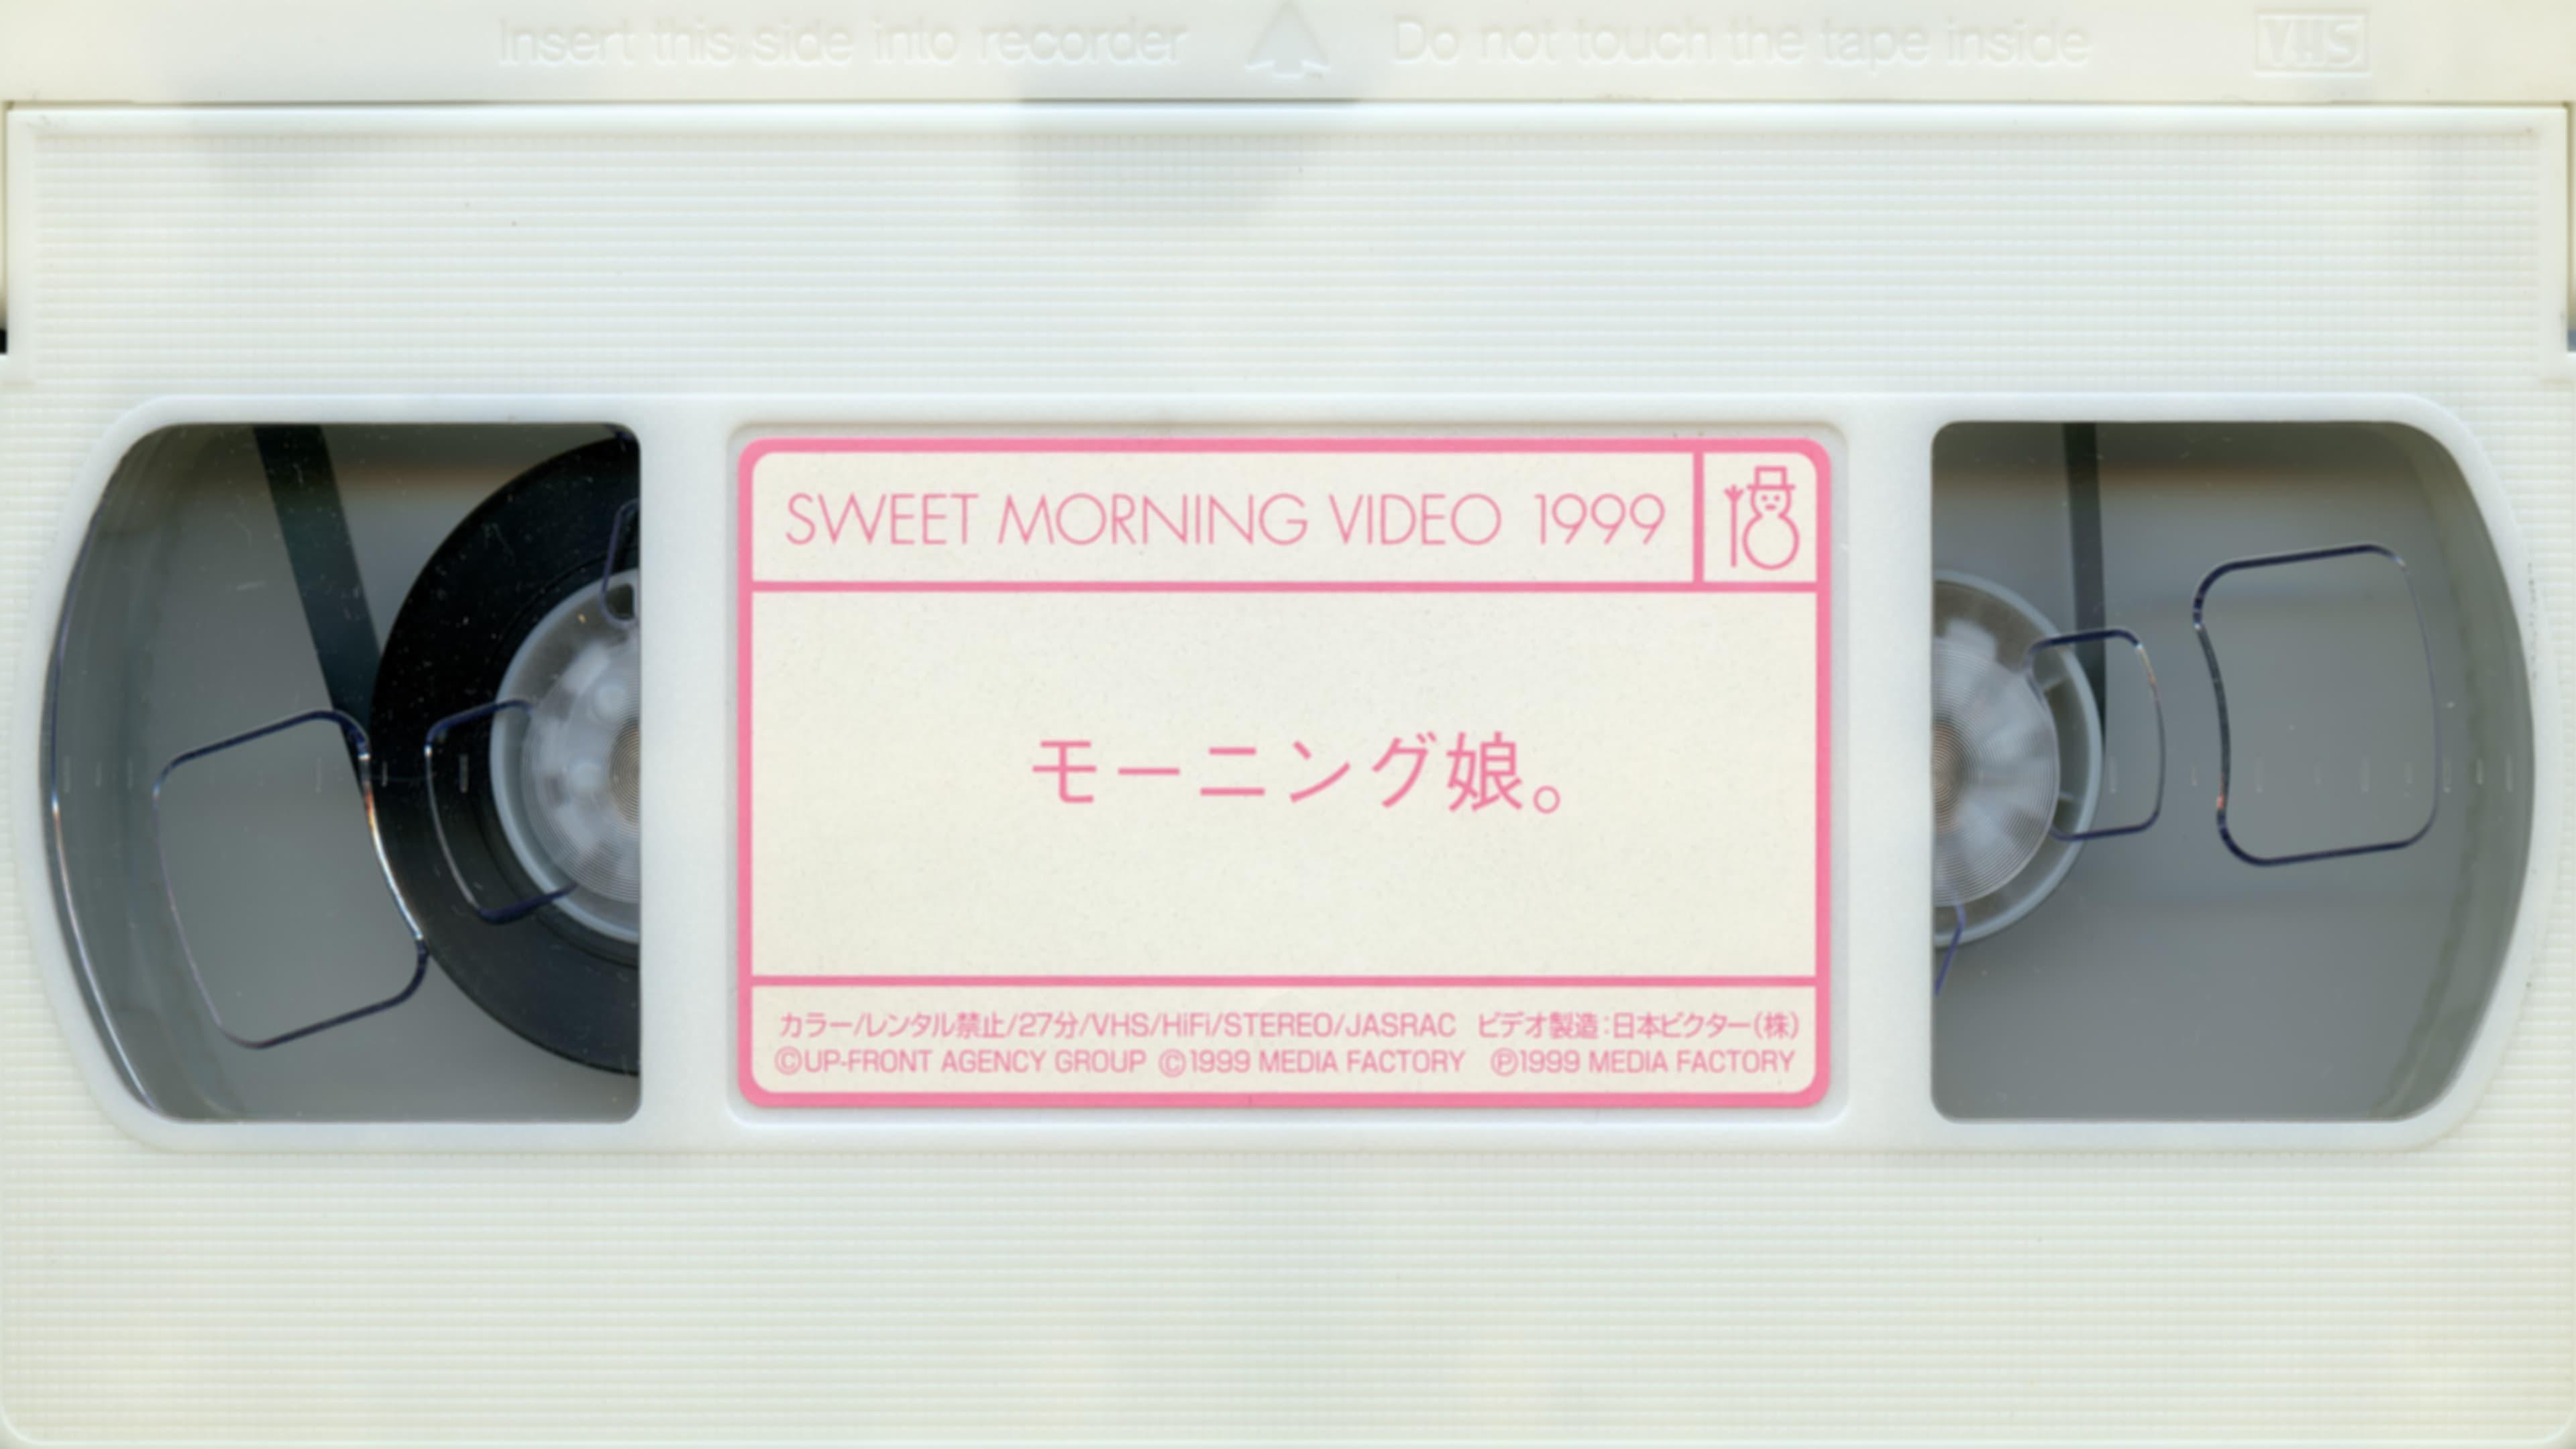 Sweet Morning Video 1999 backdrop